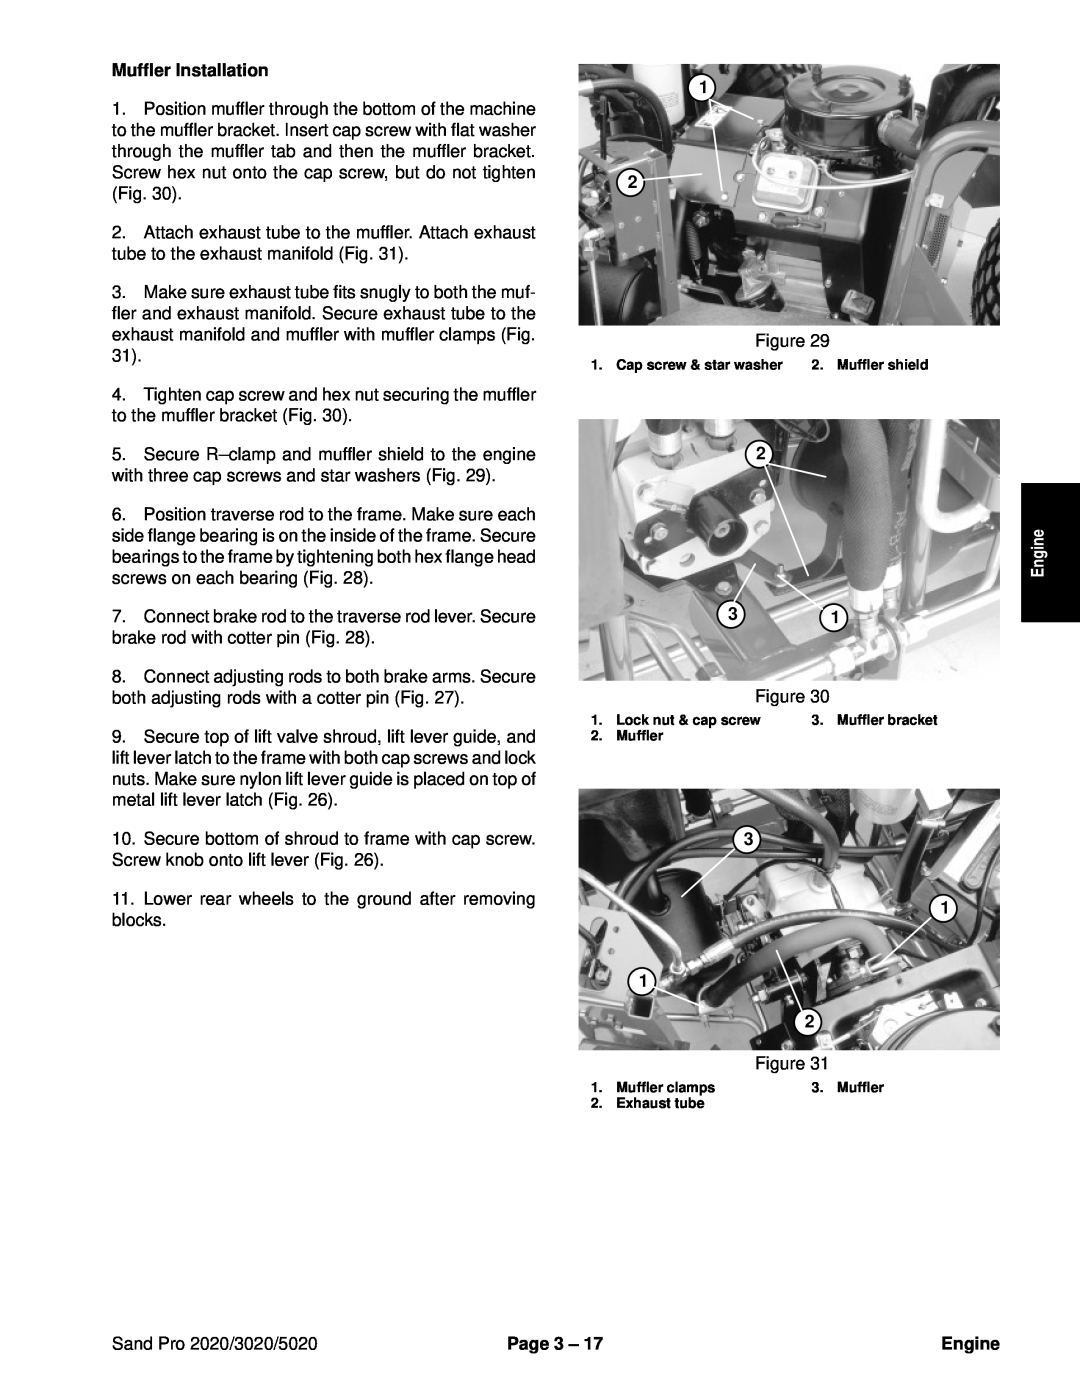 Toro service manual Muffler Installation, Engine, Sand Pro 2020/3020/5020, Page 3 